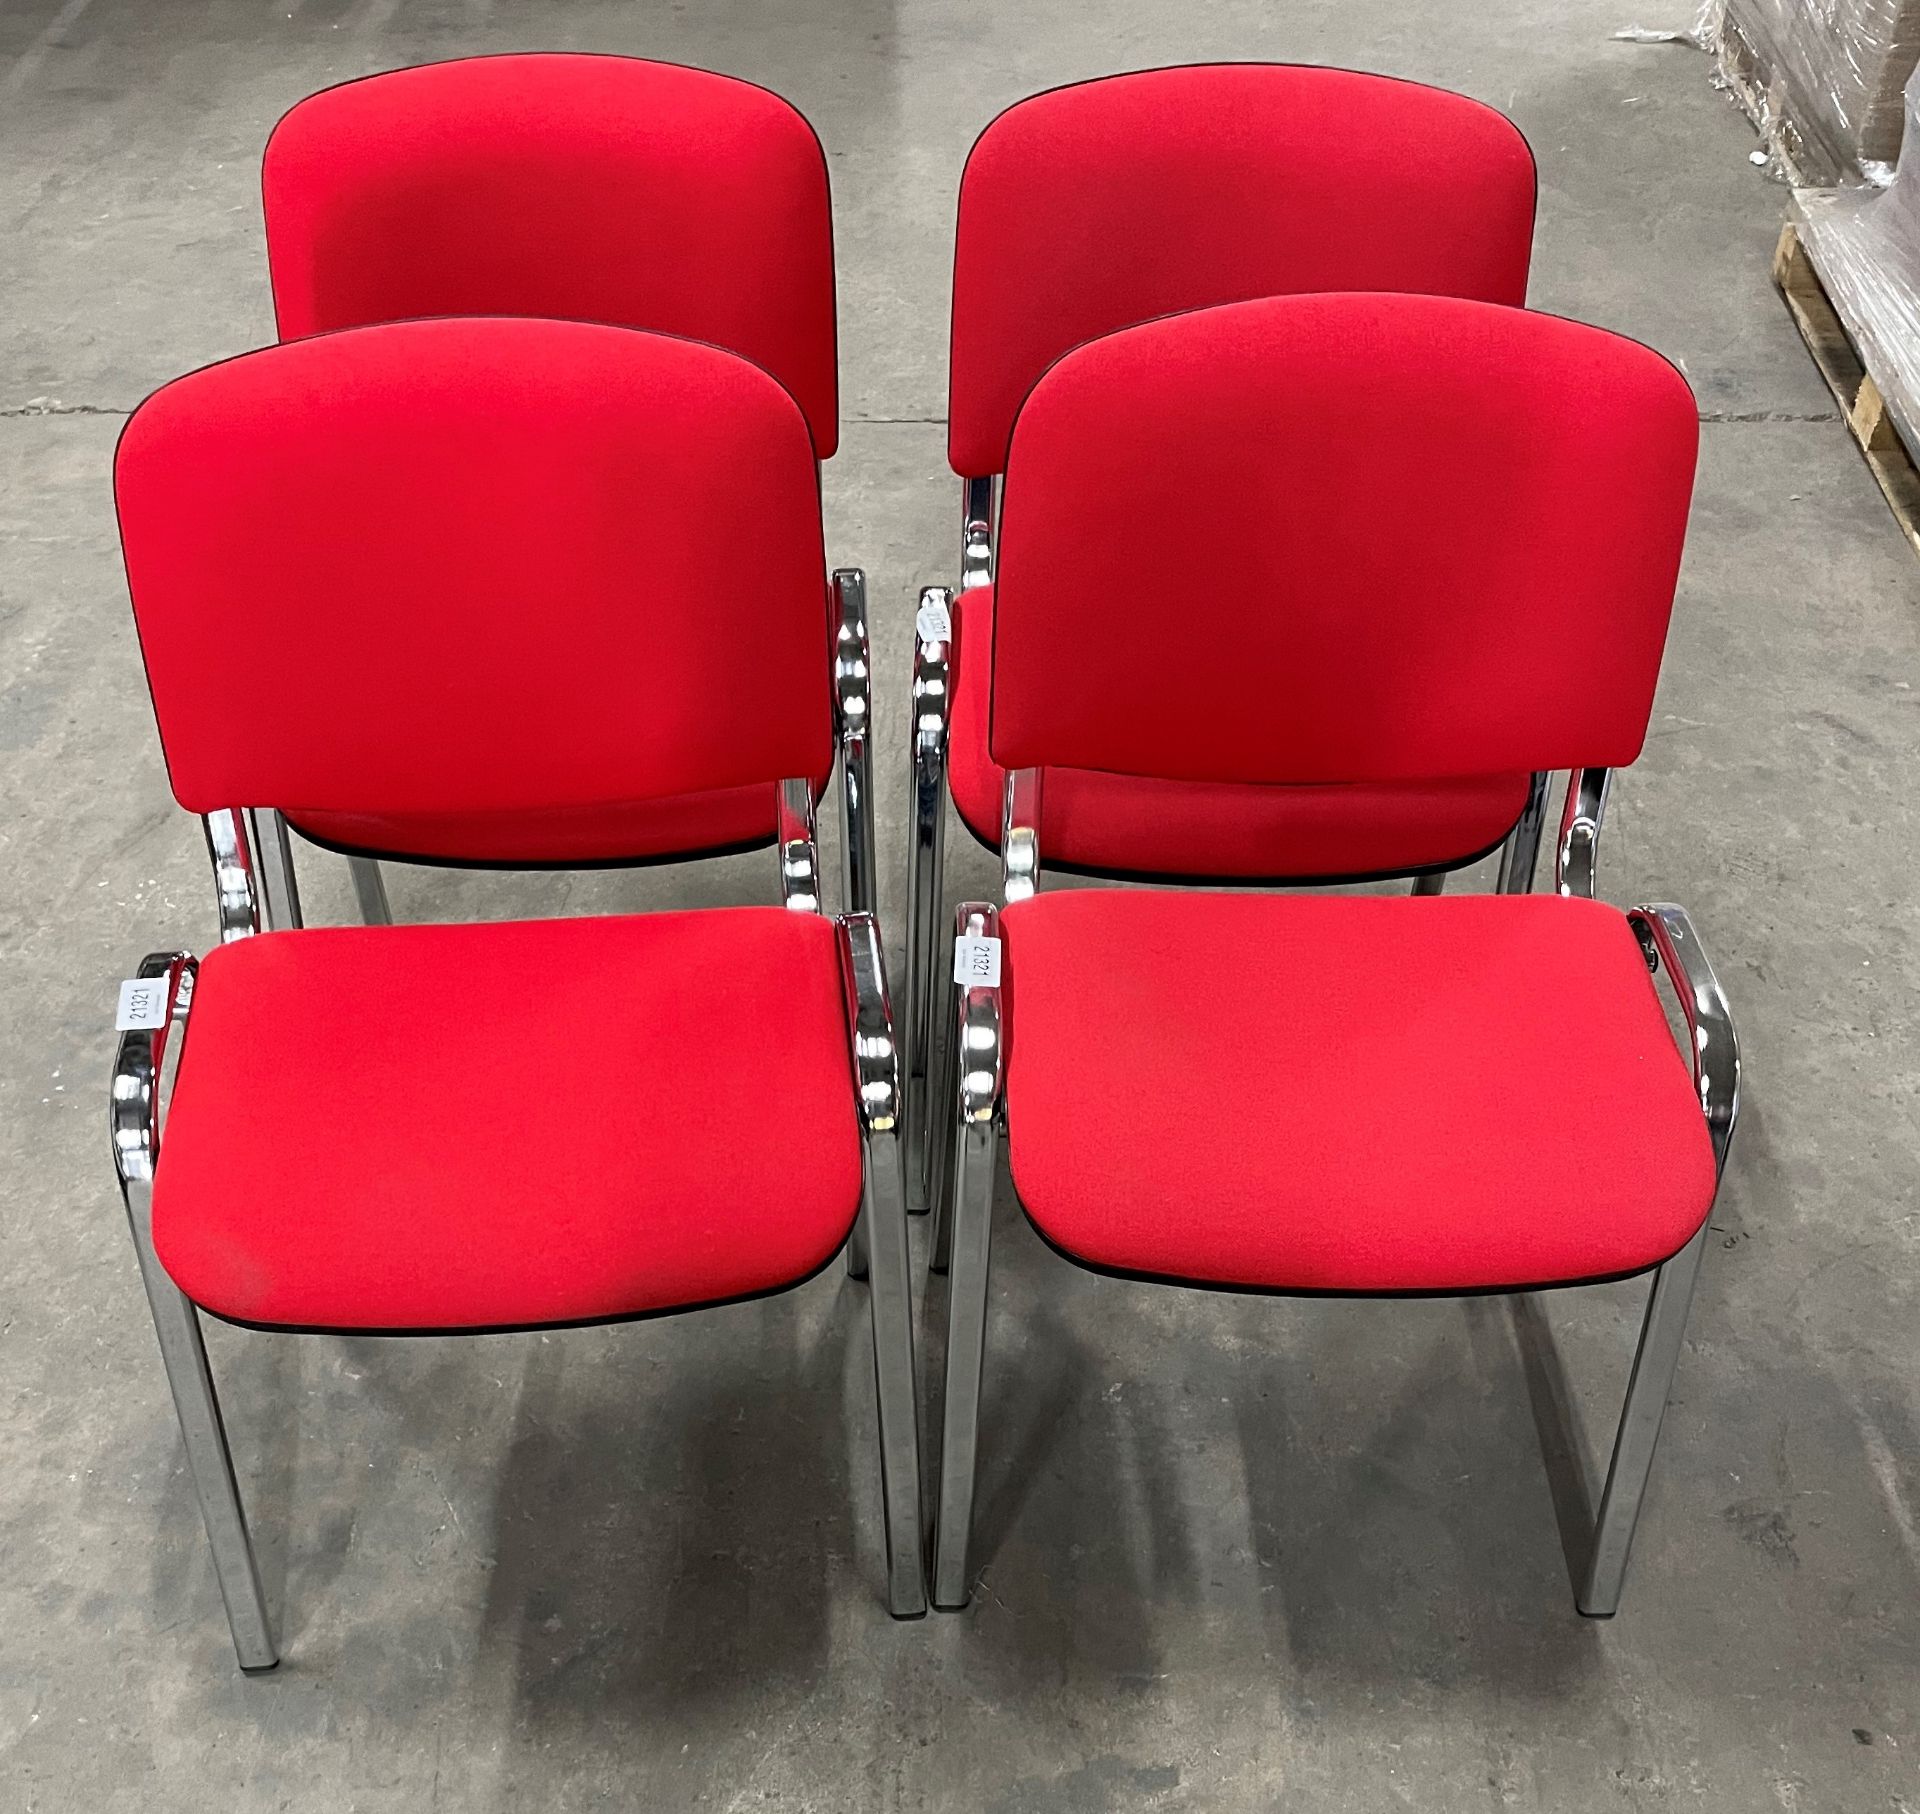 4 x Meeting Room Chairs w/Polished Chrome Legs